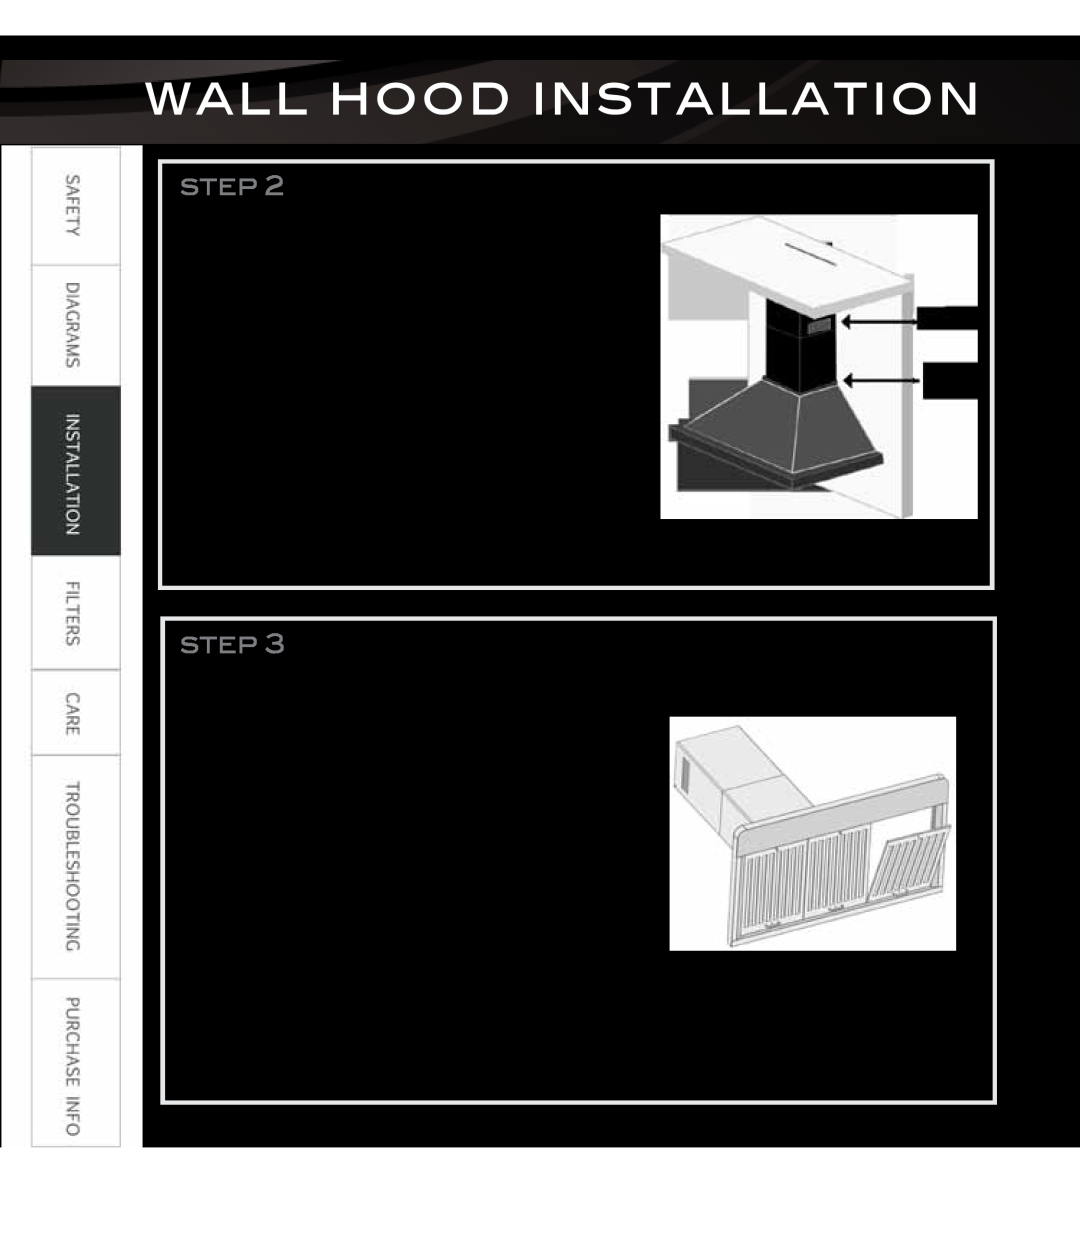 Proline PLFW543, PLFI750, PLFW812, PLFW544, PLFI543, PLFW832 Install chimney, Install grease filter, Wall Hood Installation 